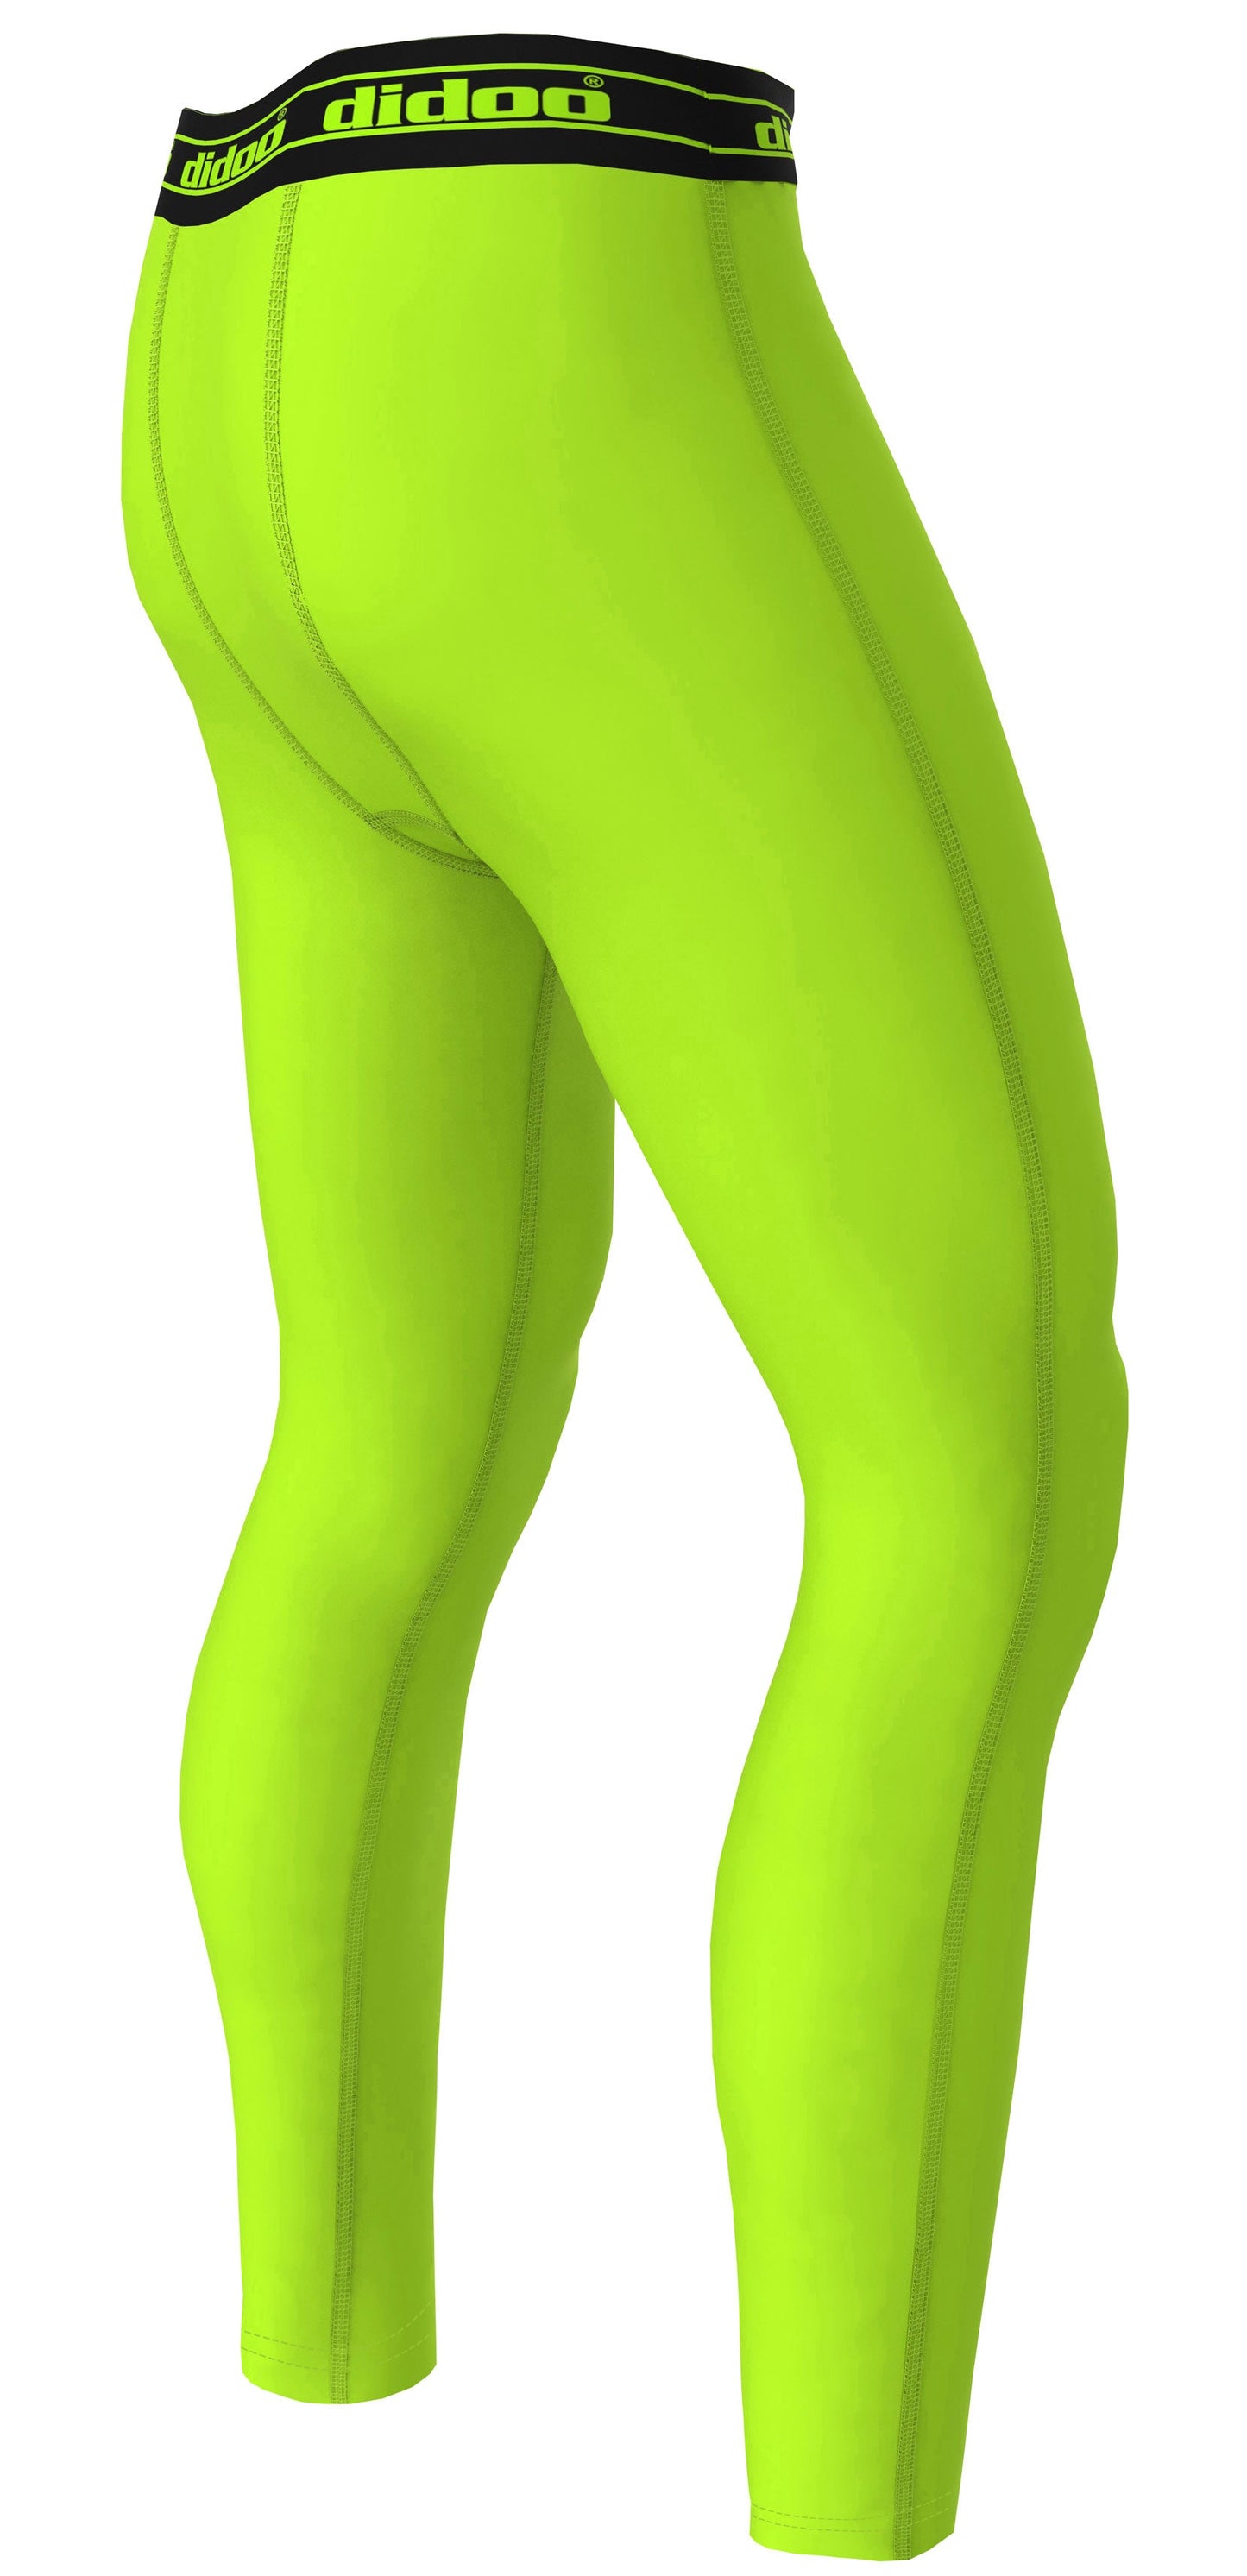 Fluorescent Green Men's Compression Base Layer Leggings